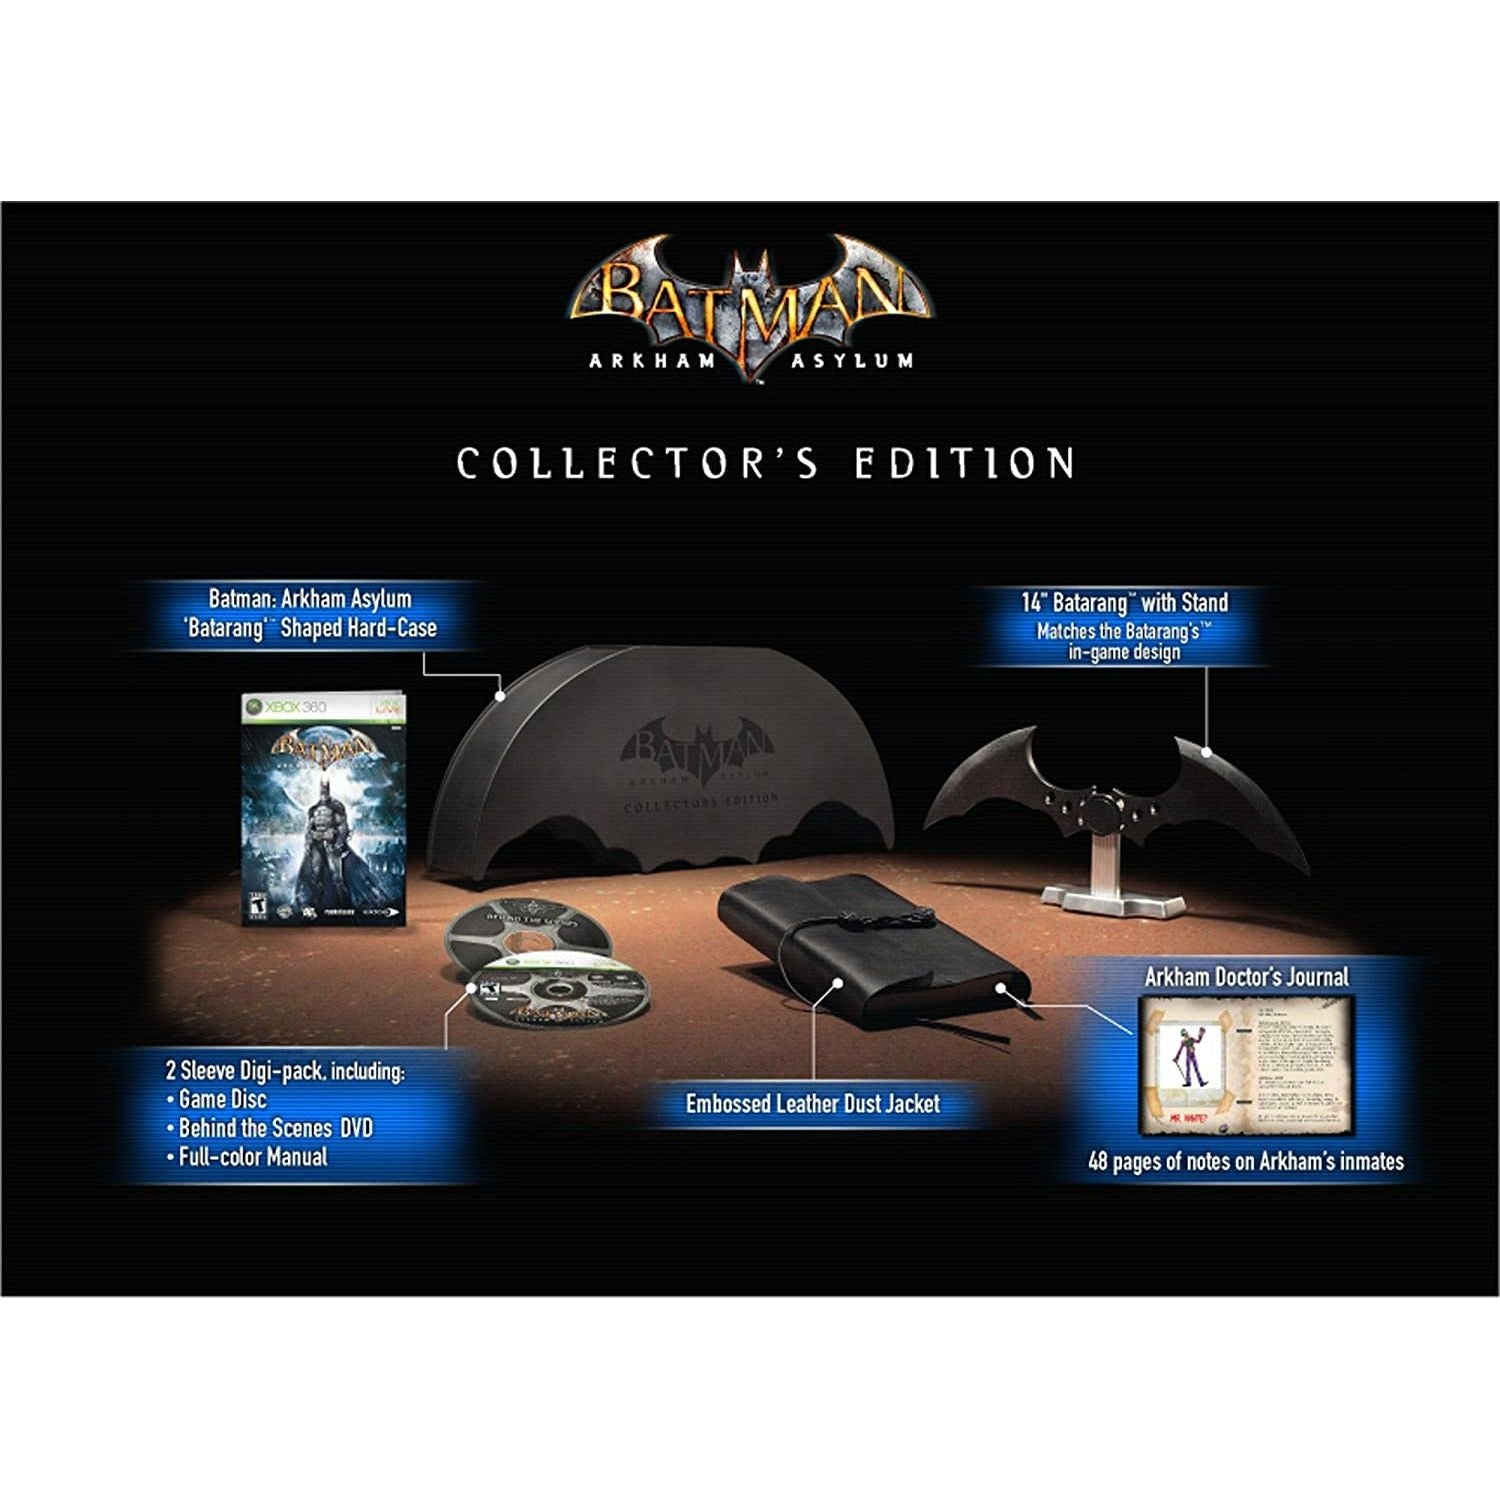 XBOX 360 - Batman Arkham Asylum Collector's Edition (Complete)